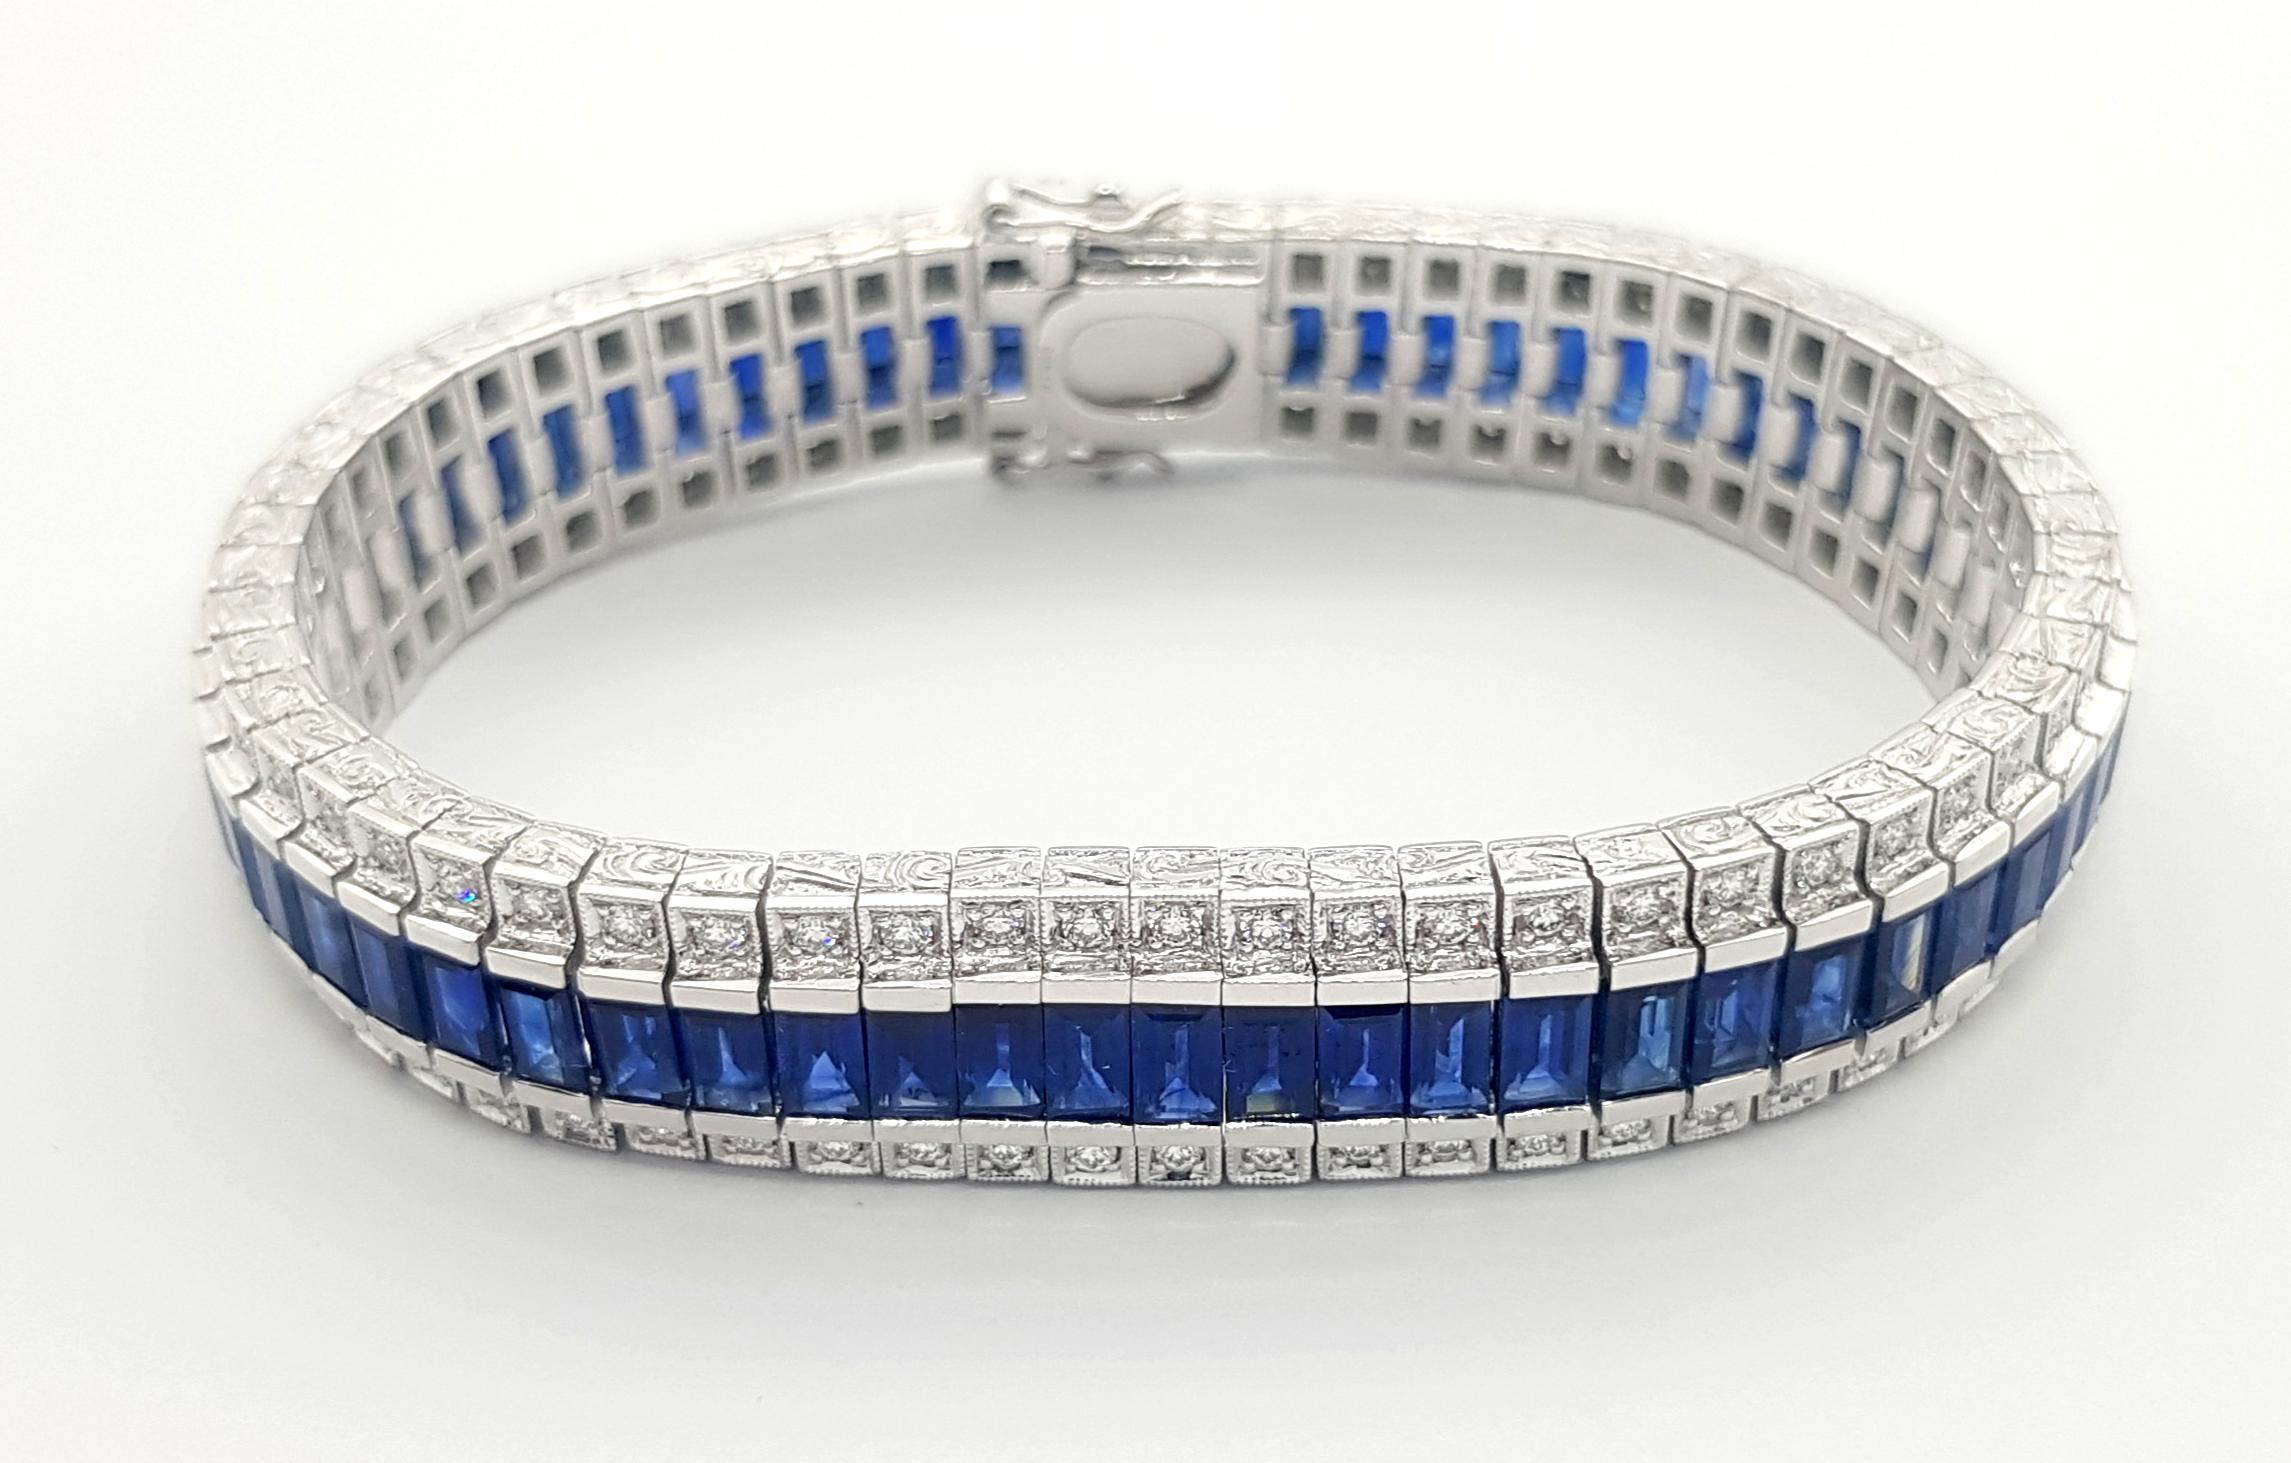 Blue Sapphire 19.90 carats with Diamond 2.07 carats Bracelet set in Platinum 950 Settings

Width:  1.2 cm 
Length: 18.0 cm
Total Weight: 103.14 grams

